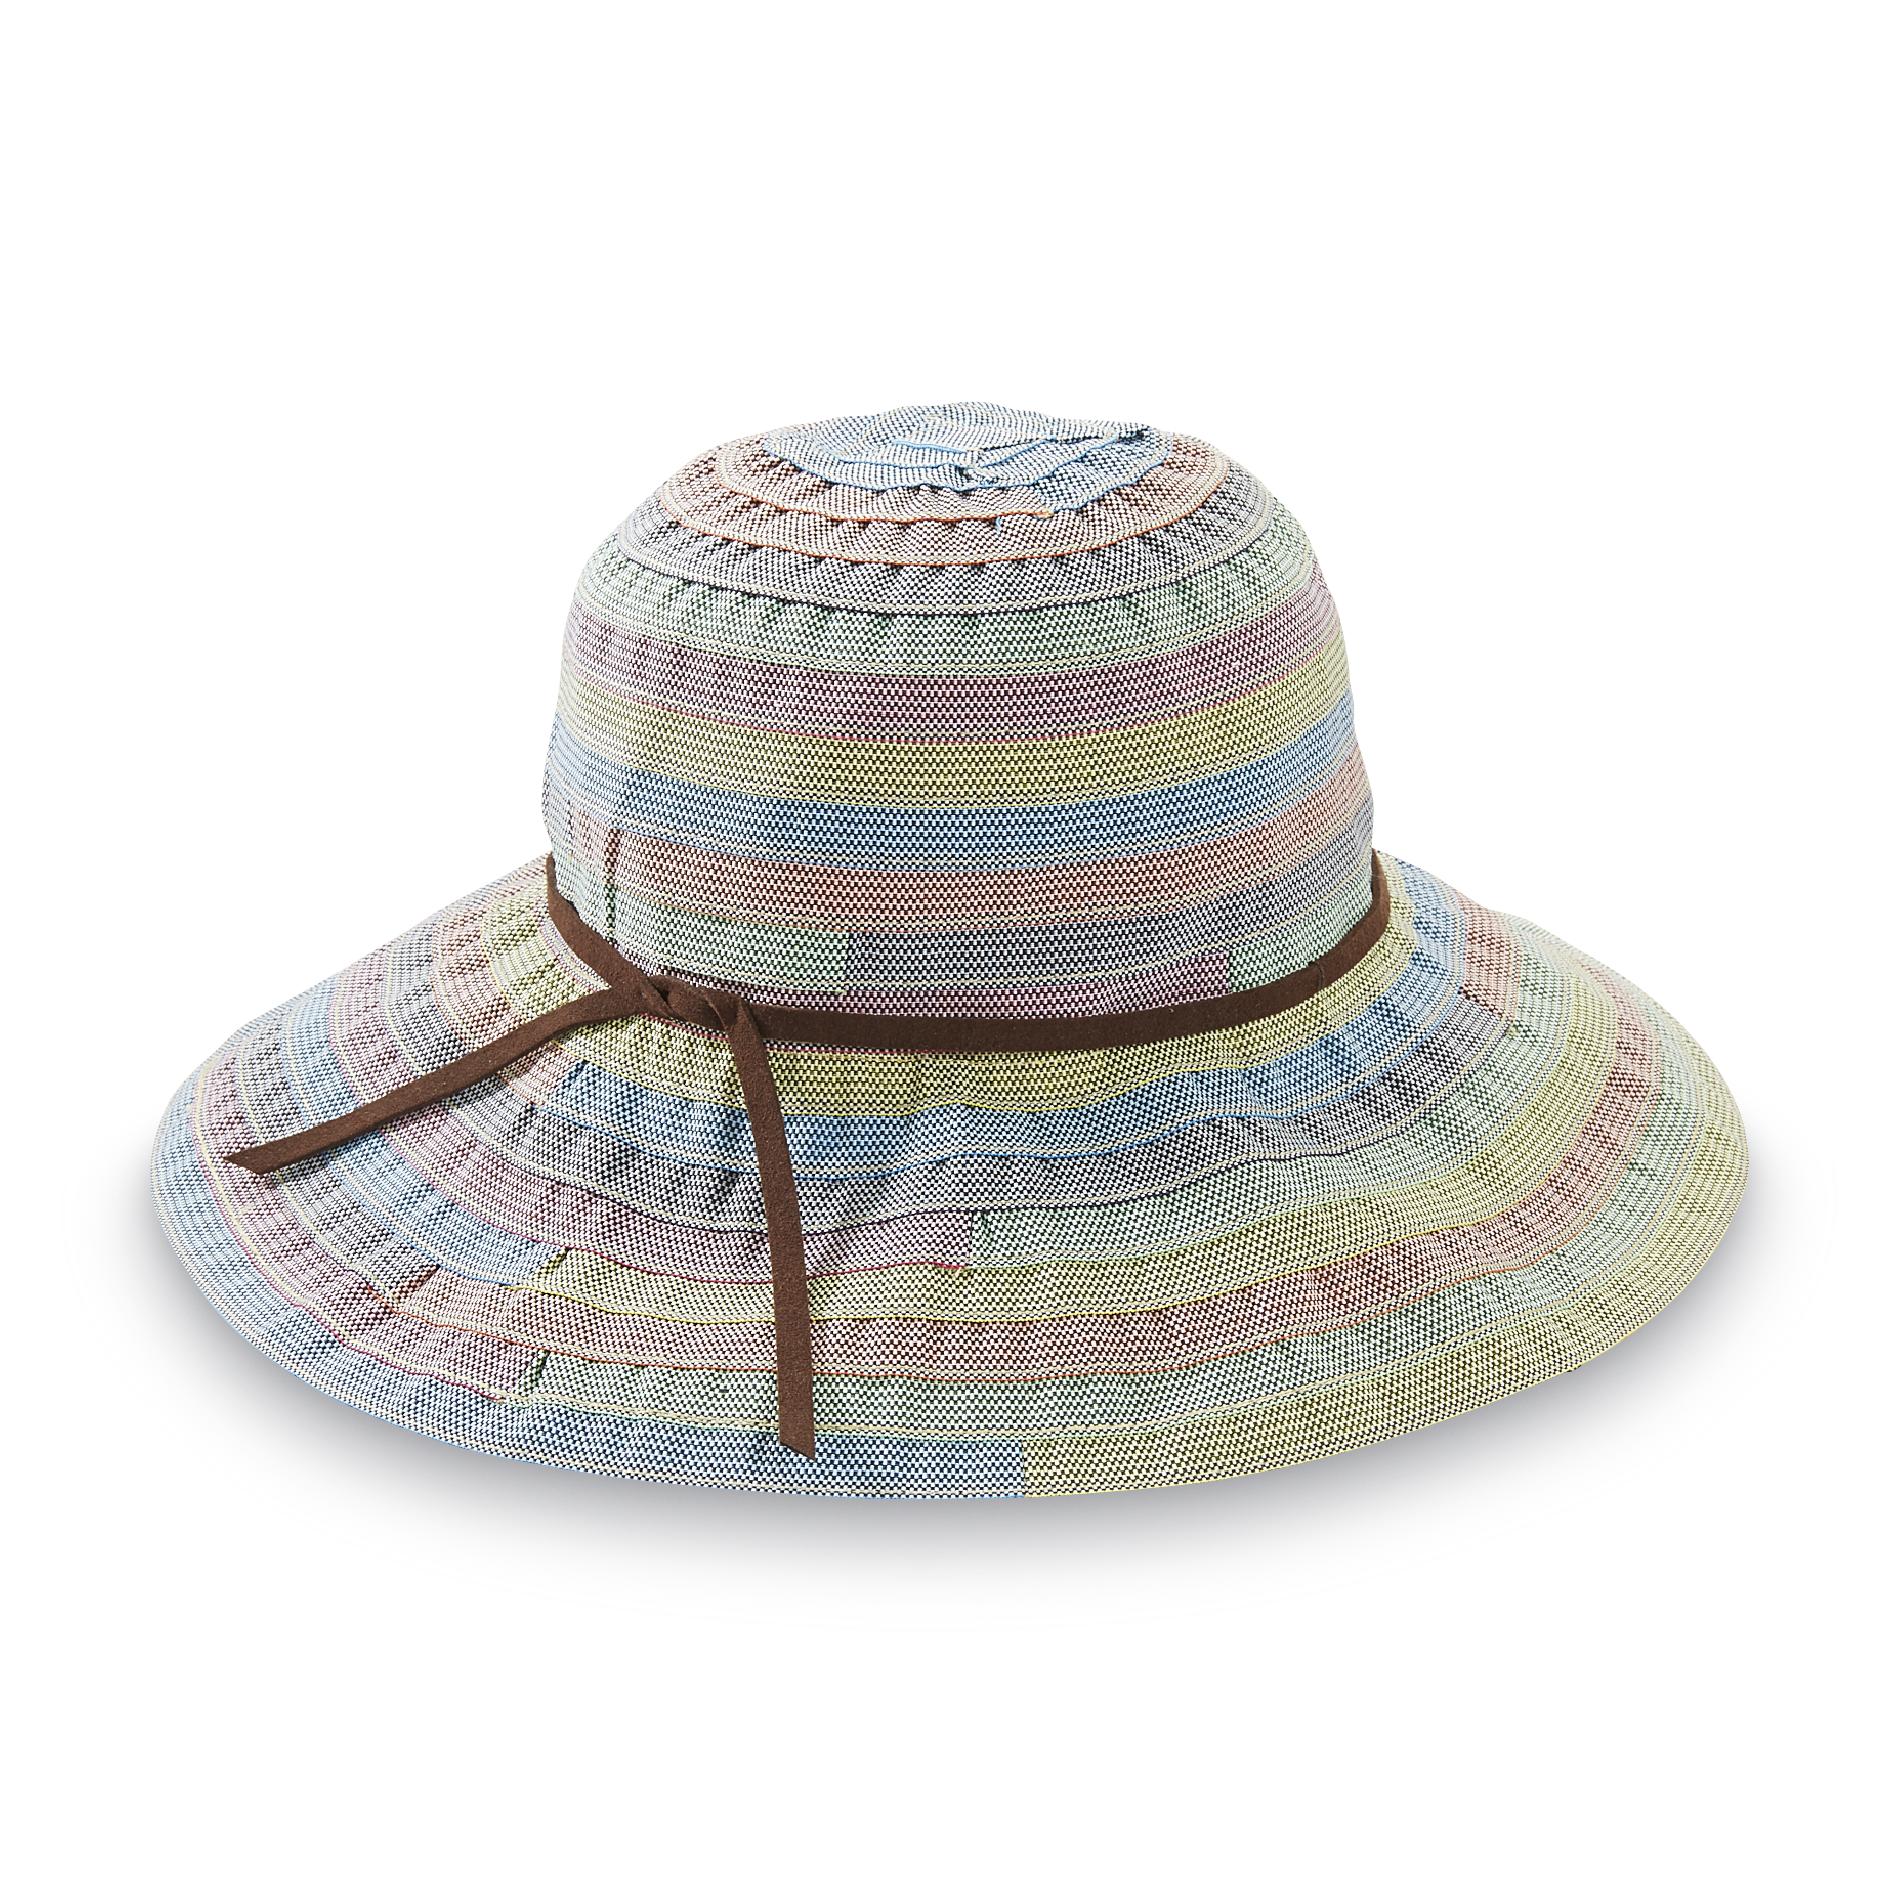 Joe Boxer Junior's Summer Hat - Multicolor Checkered